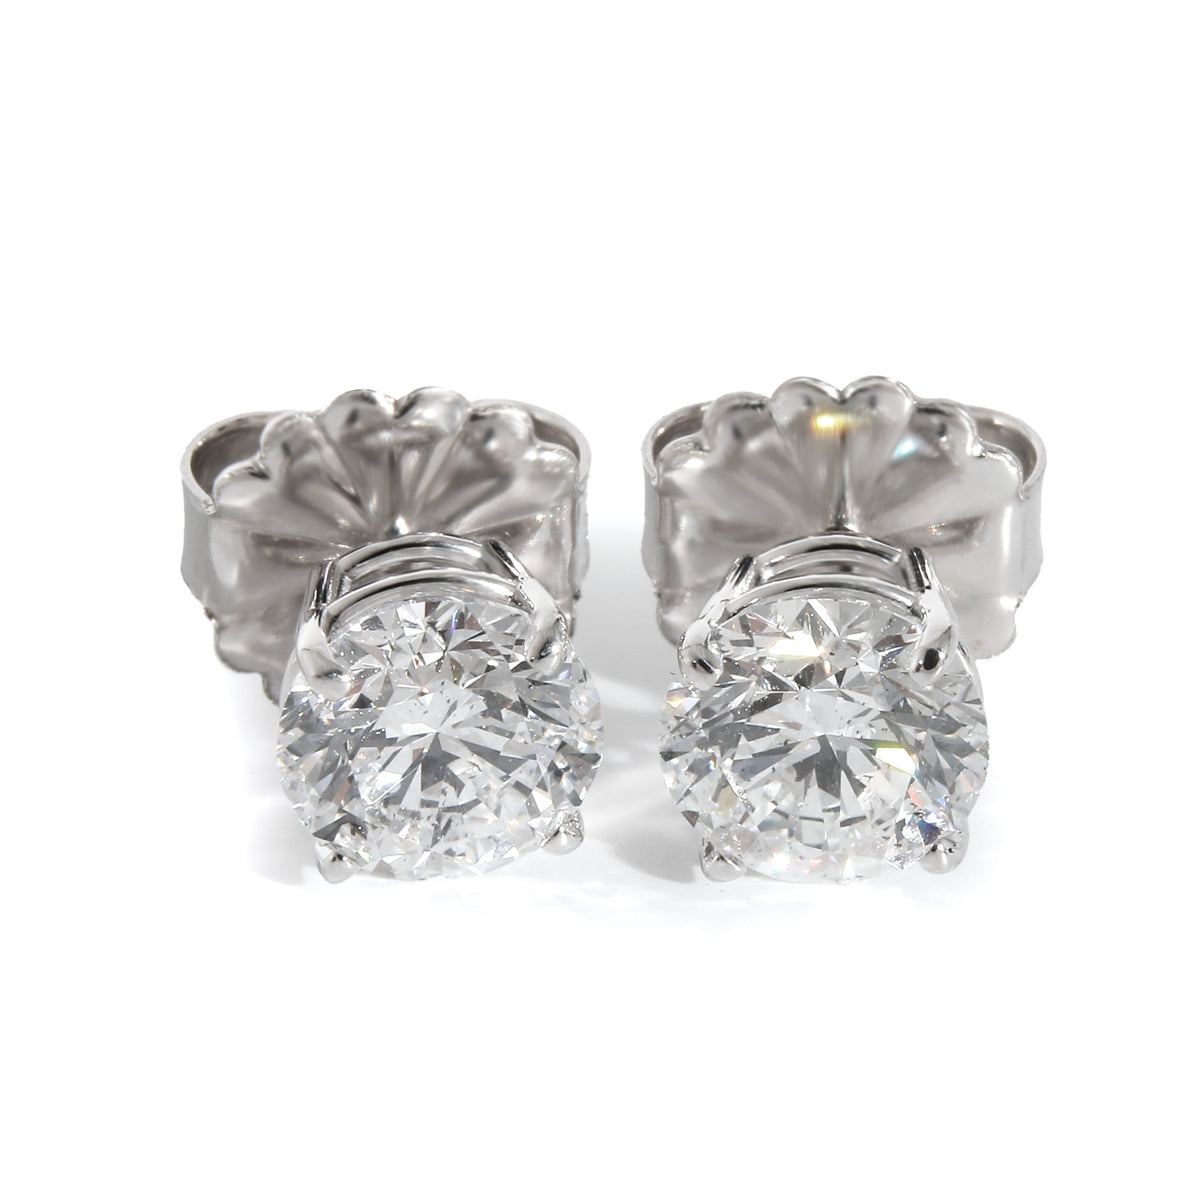 Diamond Stud Earrings in 14K White Gold (3.16 CTW)